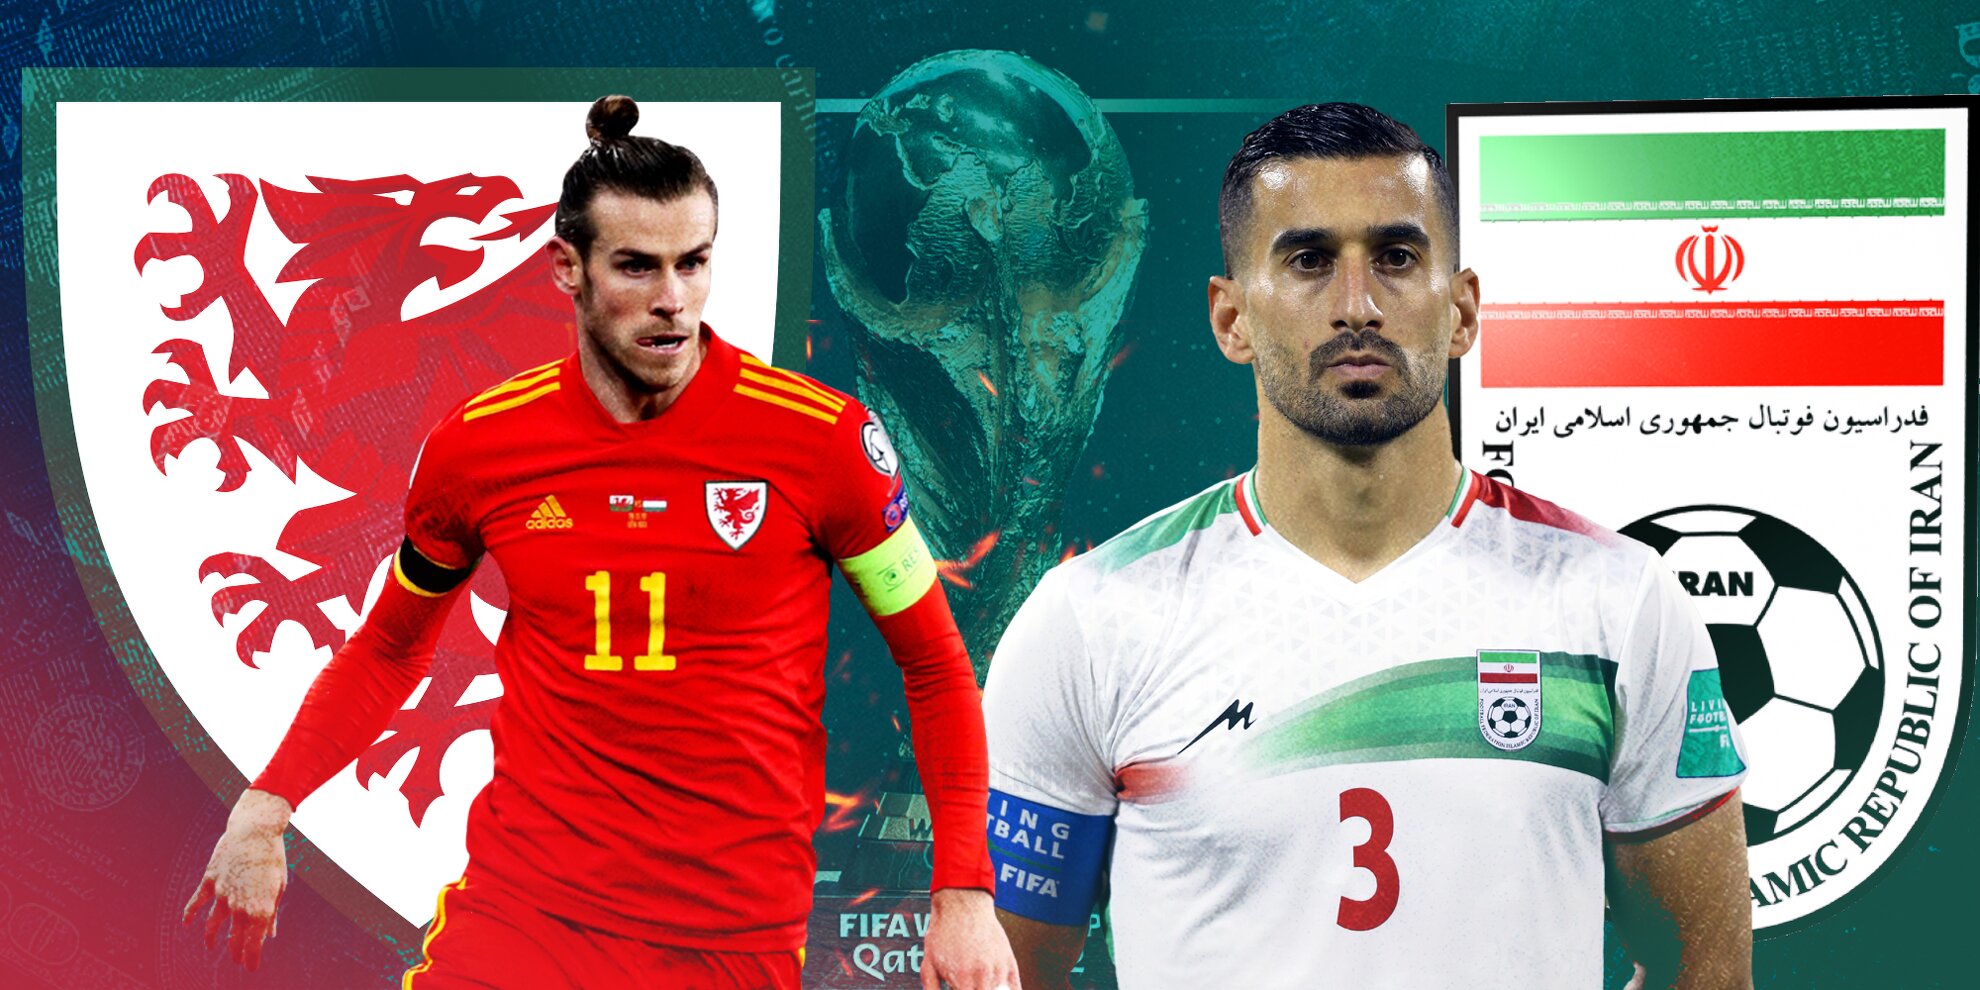 Wales vs Iran: Predicted lineup, injury news, head-to-head